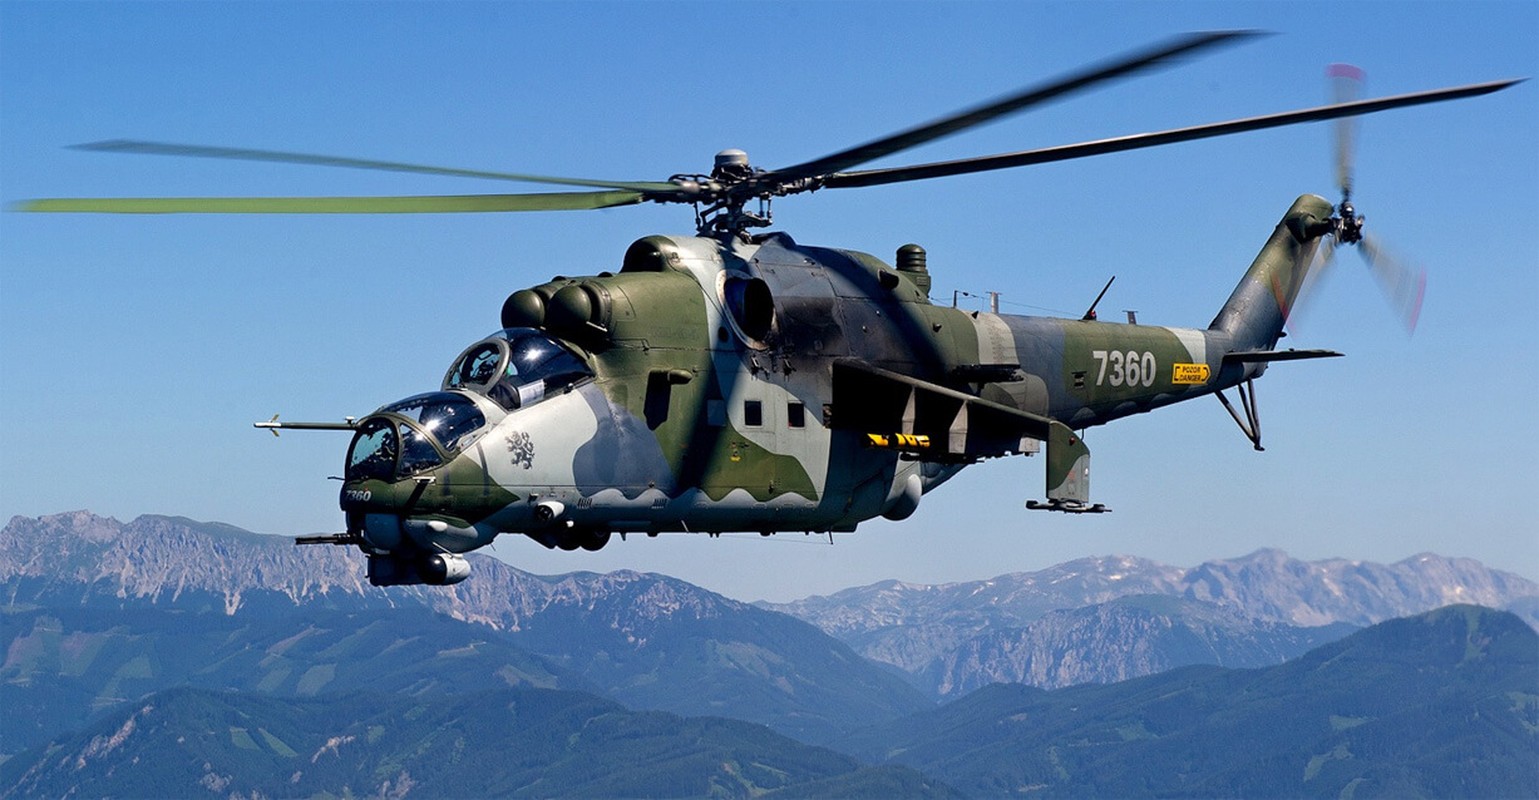 Truc thang vu trang Mi-35 cua Nga roi o Syria, phi cong thiet mang-Hinh-7